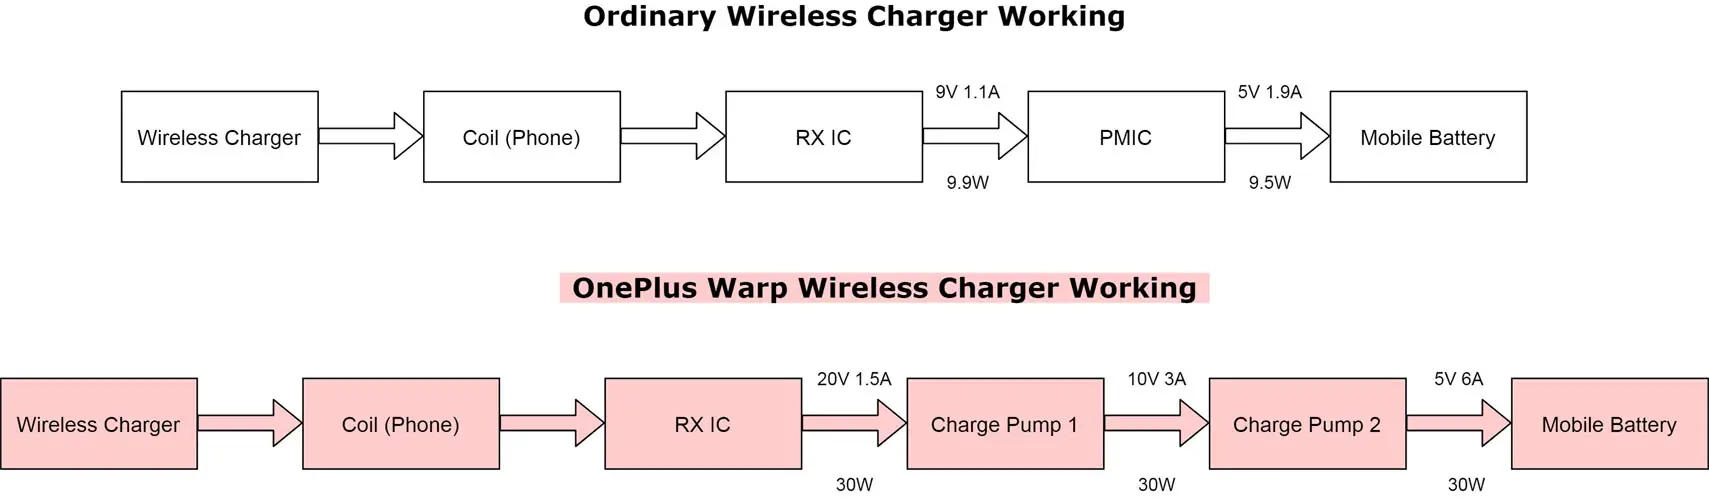 OnePlus Warp Wireless Charger Working Circuit Chart